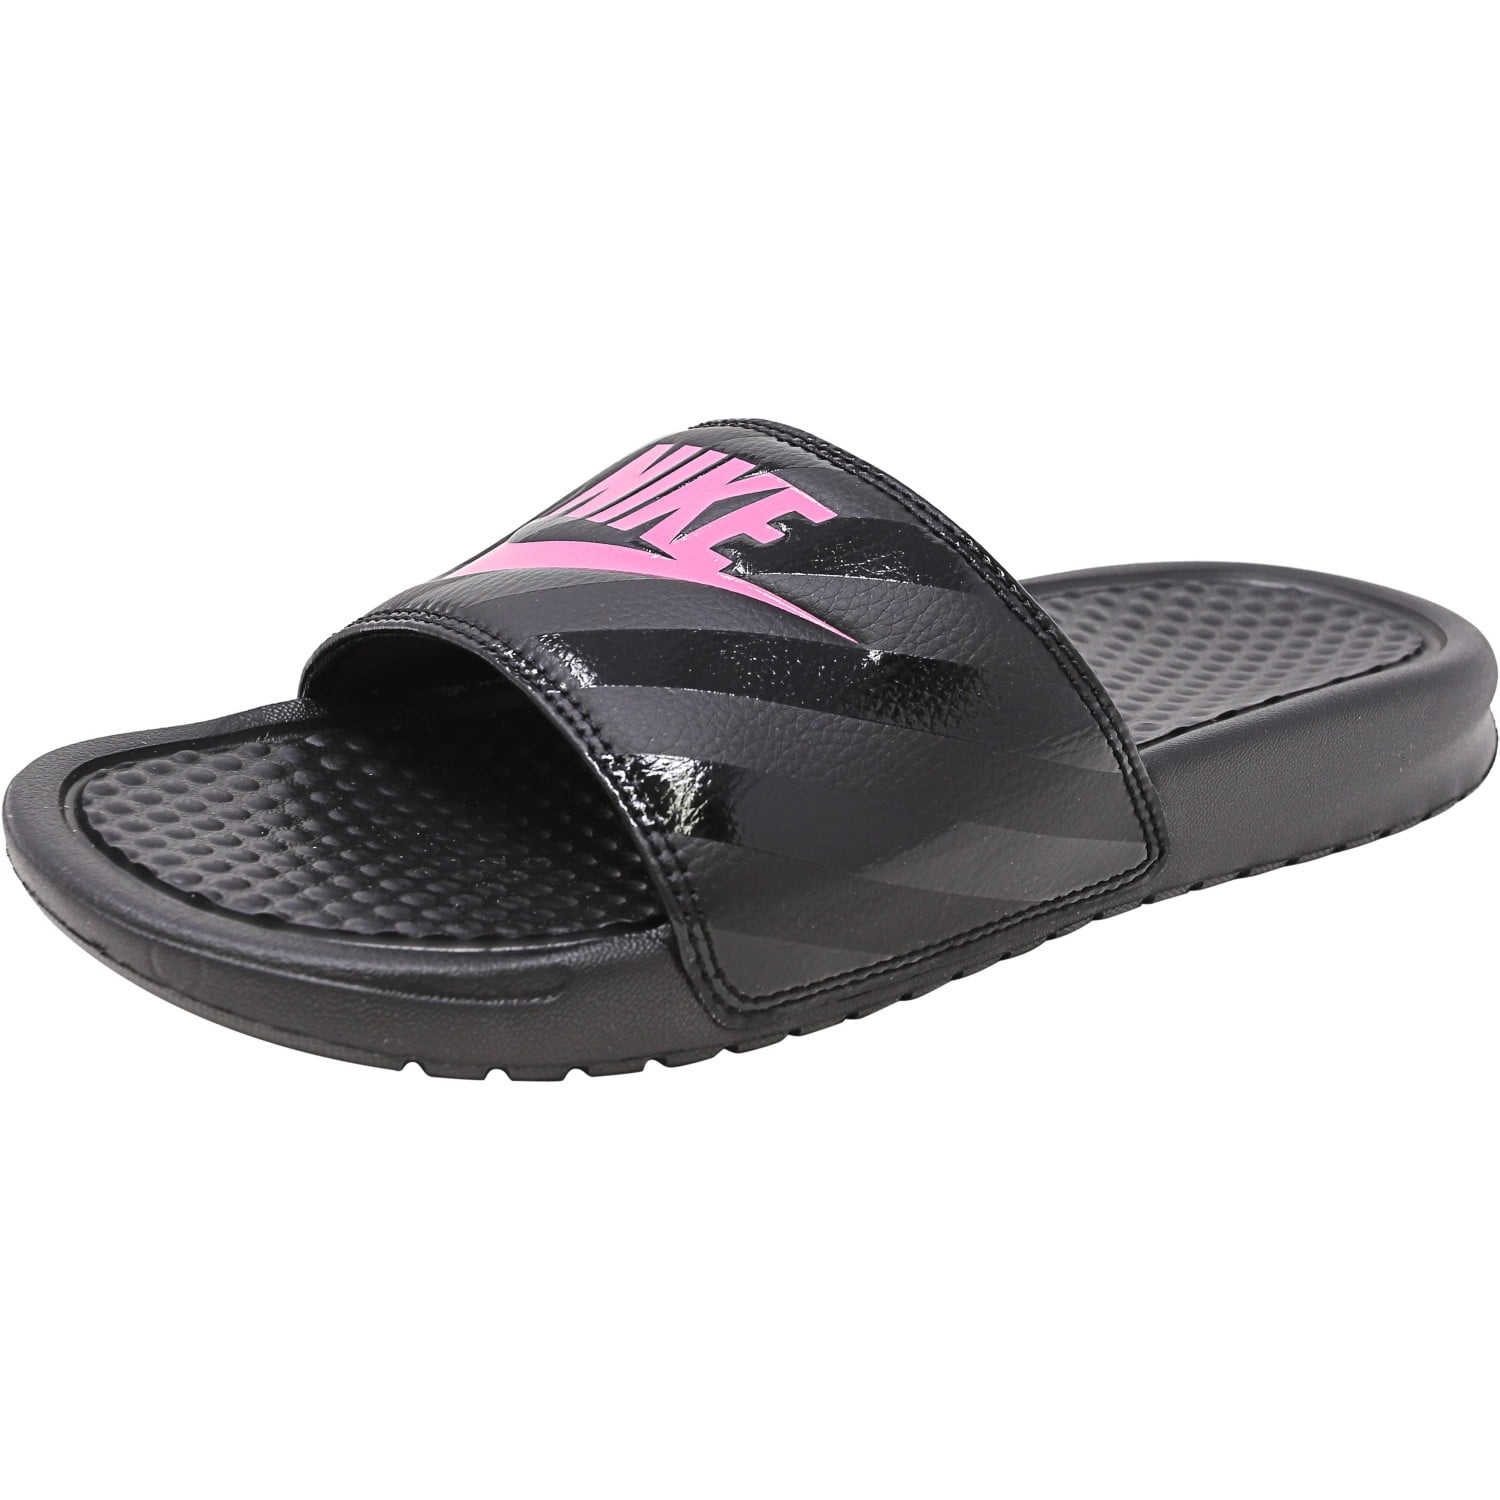 Nike Benassi Jdi Black / Vivid Pink - Slide Sandals -